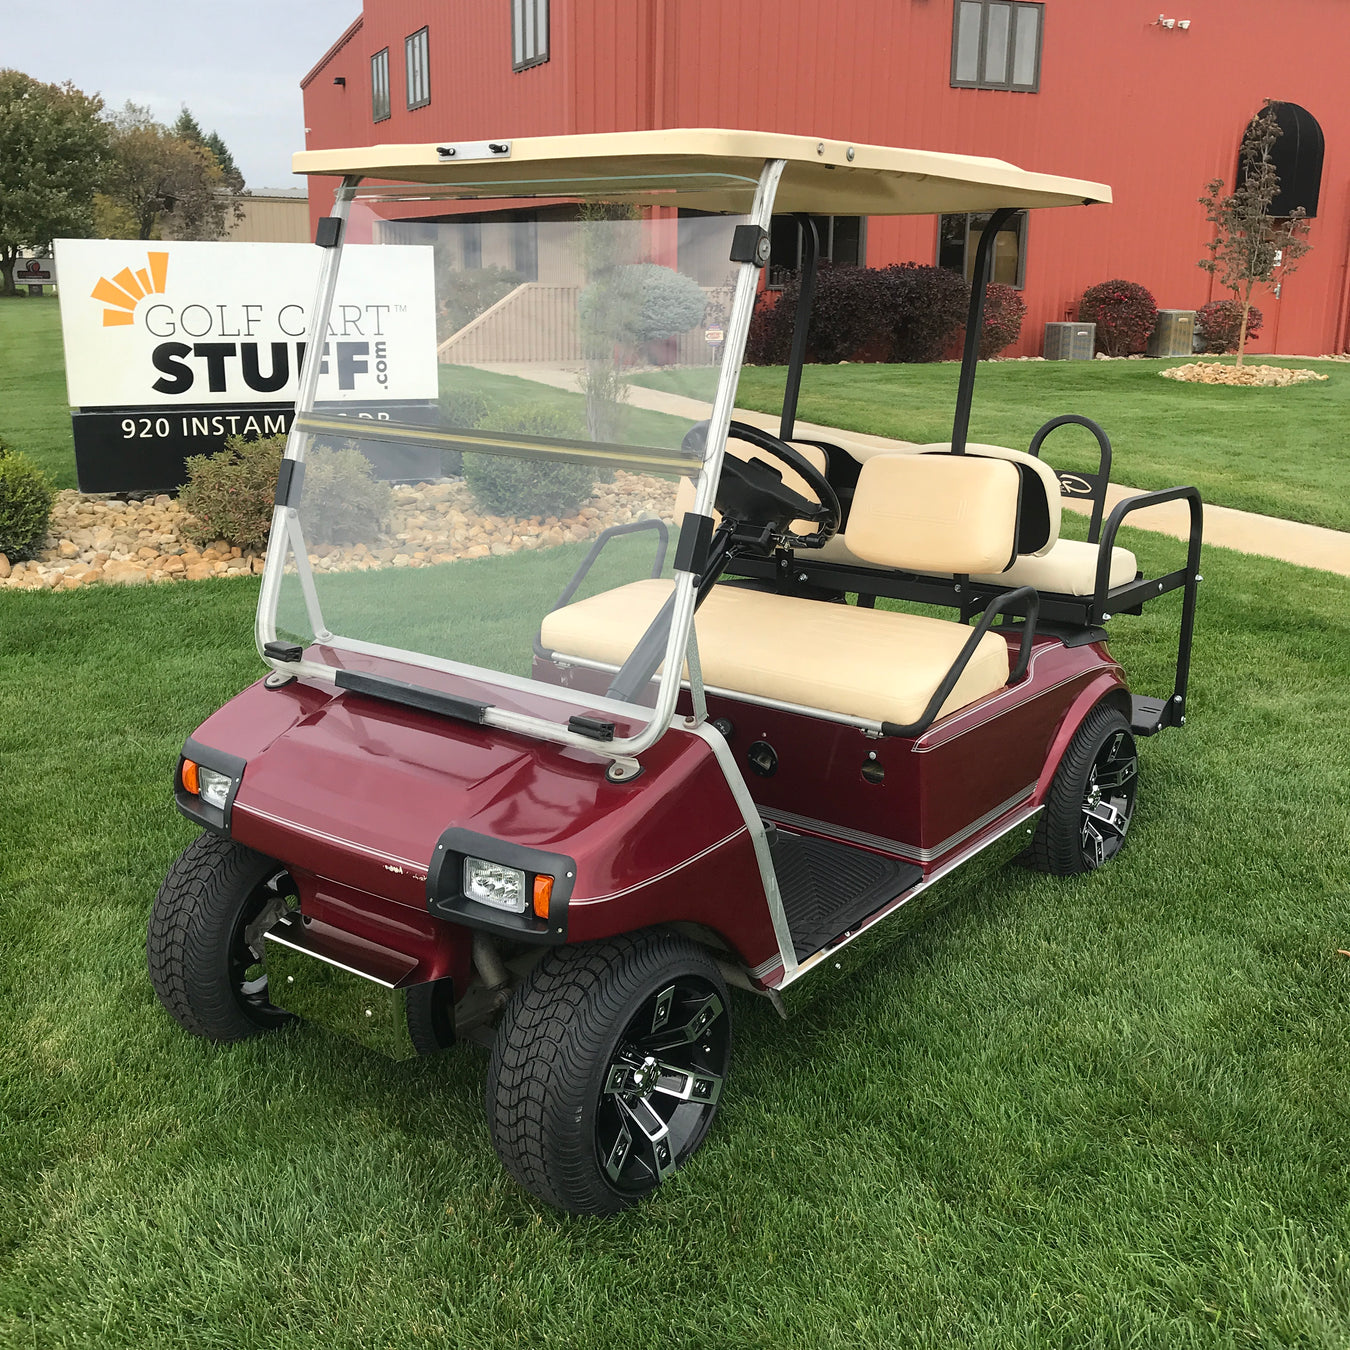 Premium Golf Cart Accessories For EZGO, Club Car, and Yamaha Carts